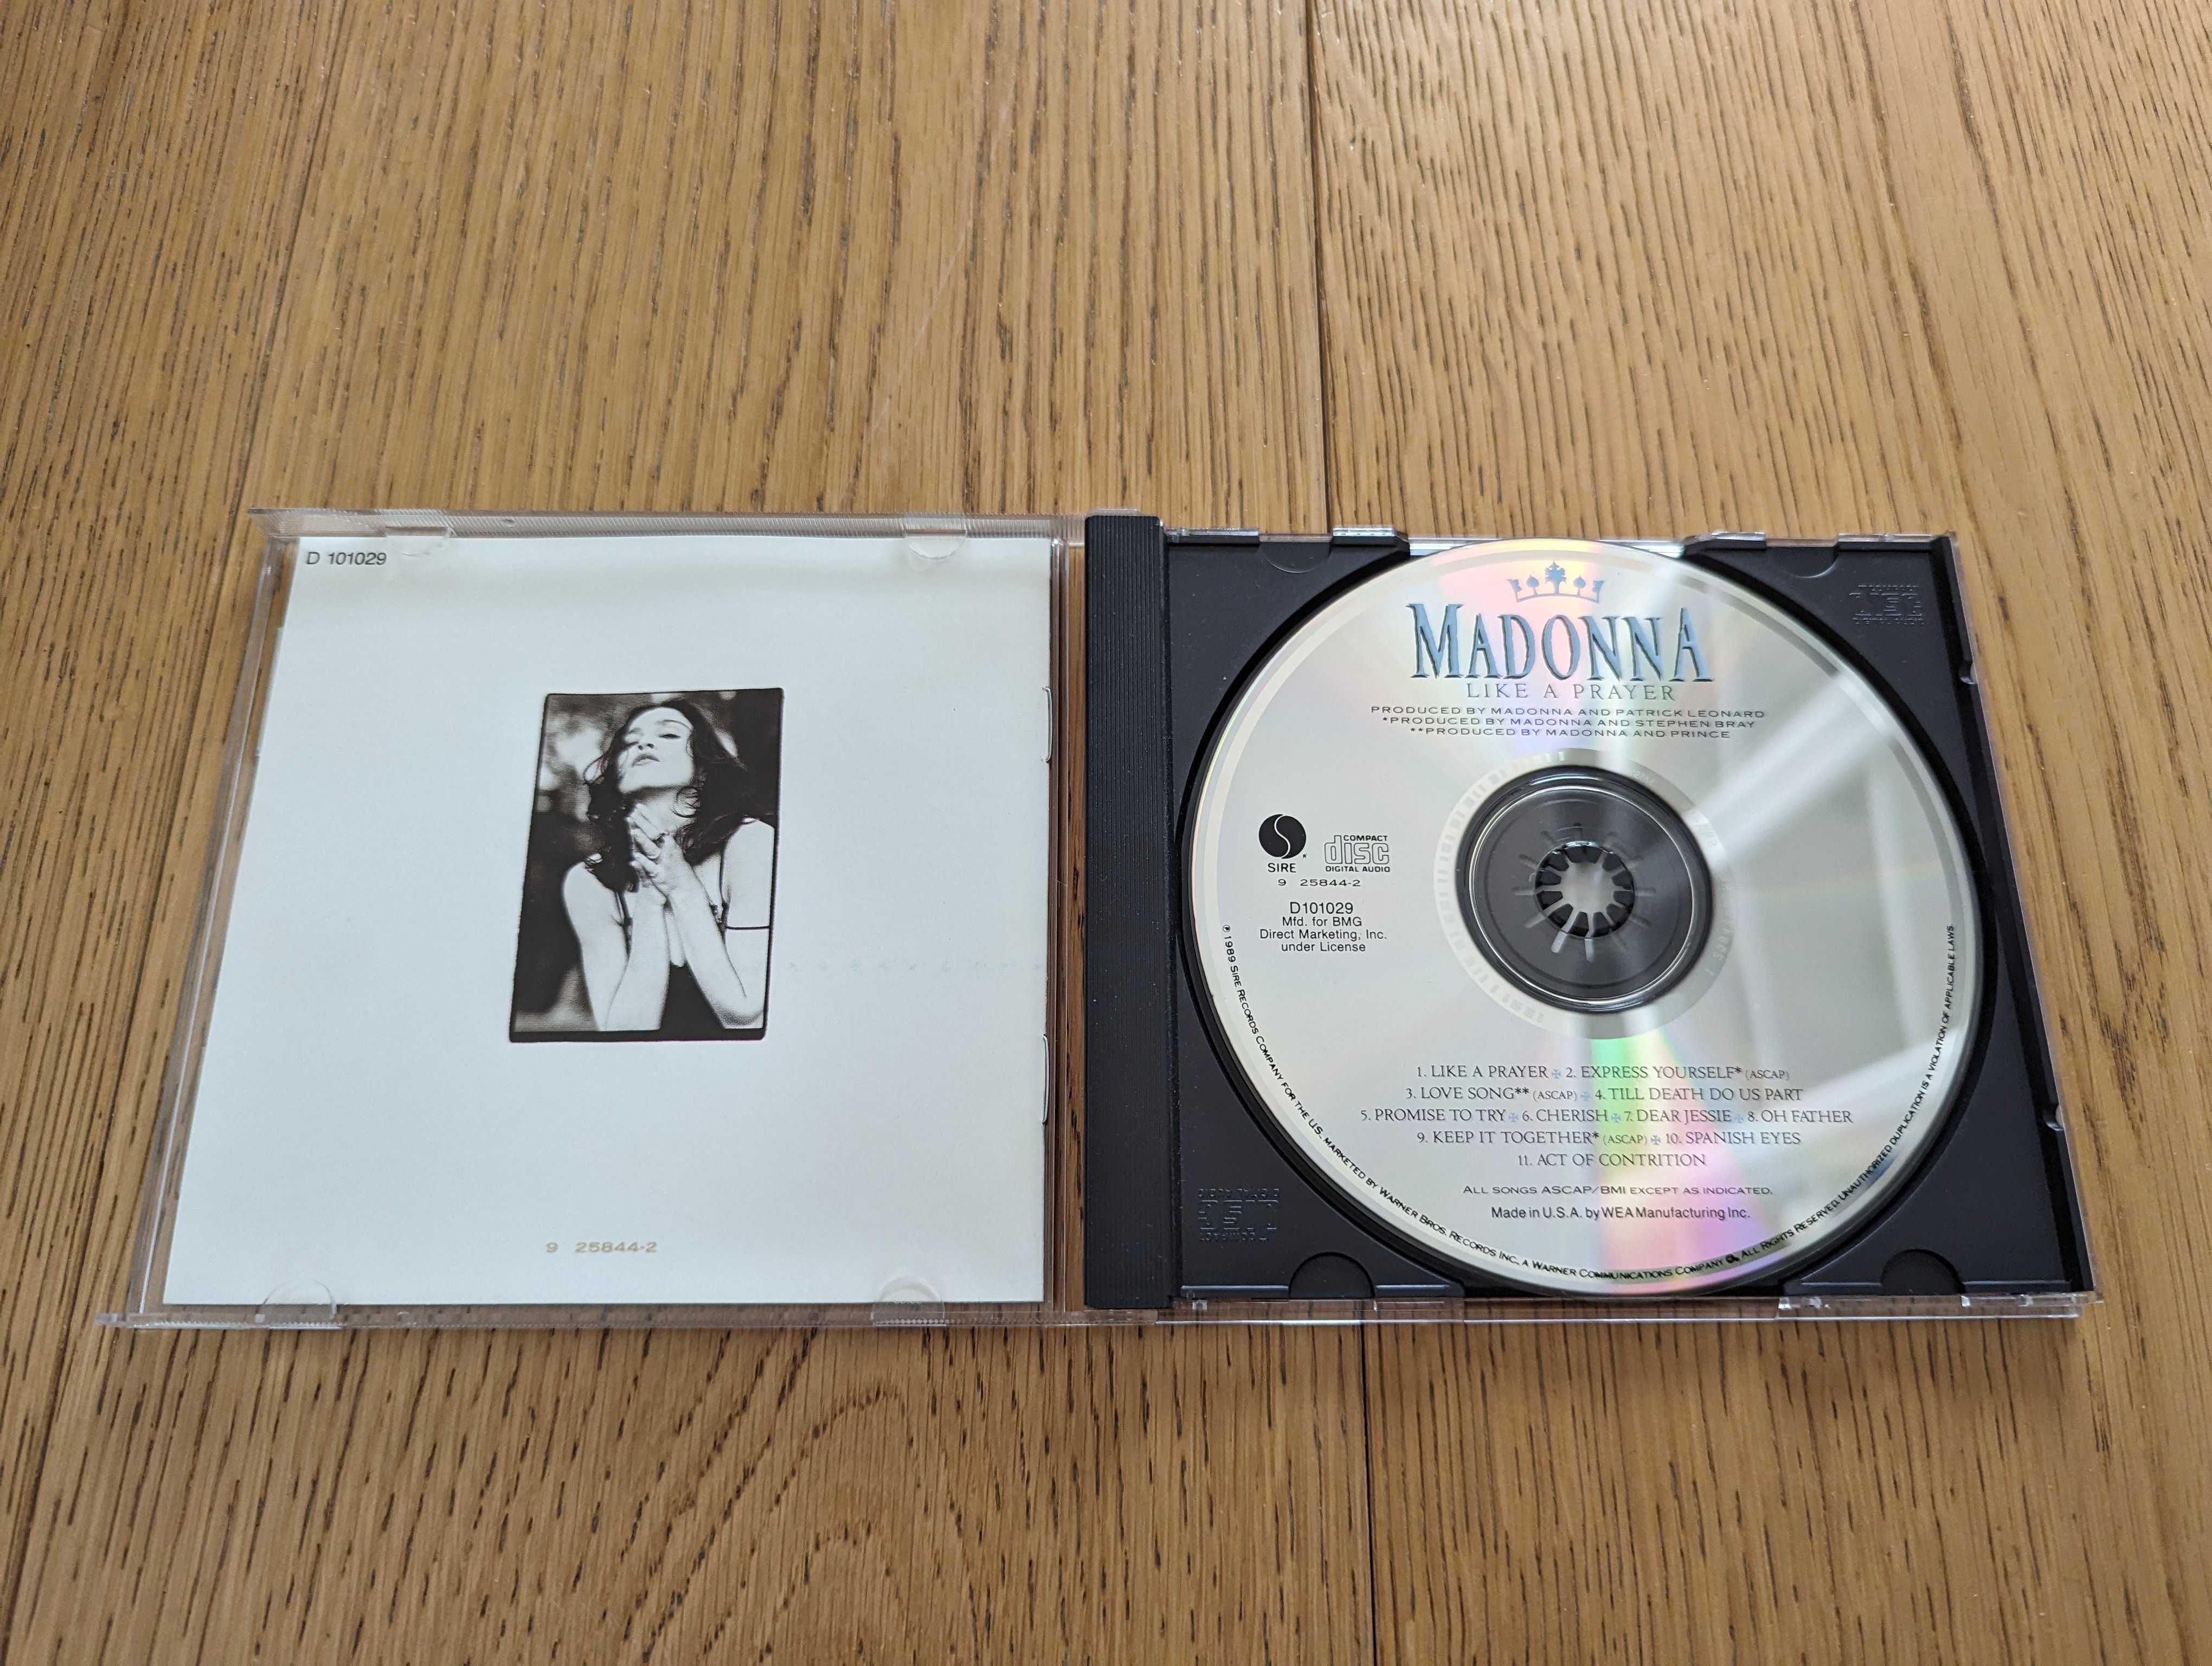 Madonna - Like a Prayer CD